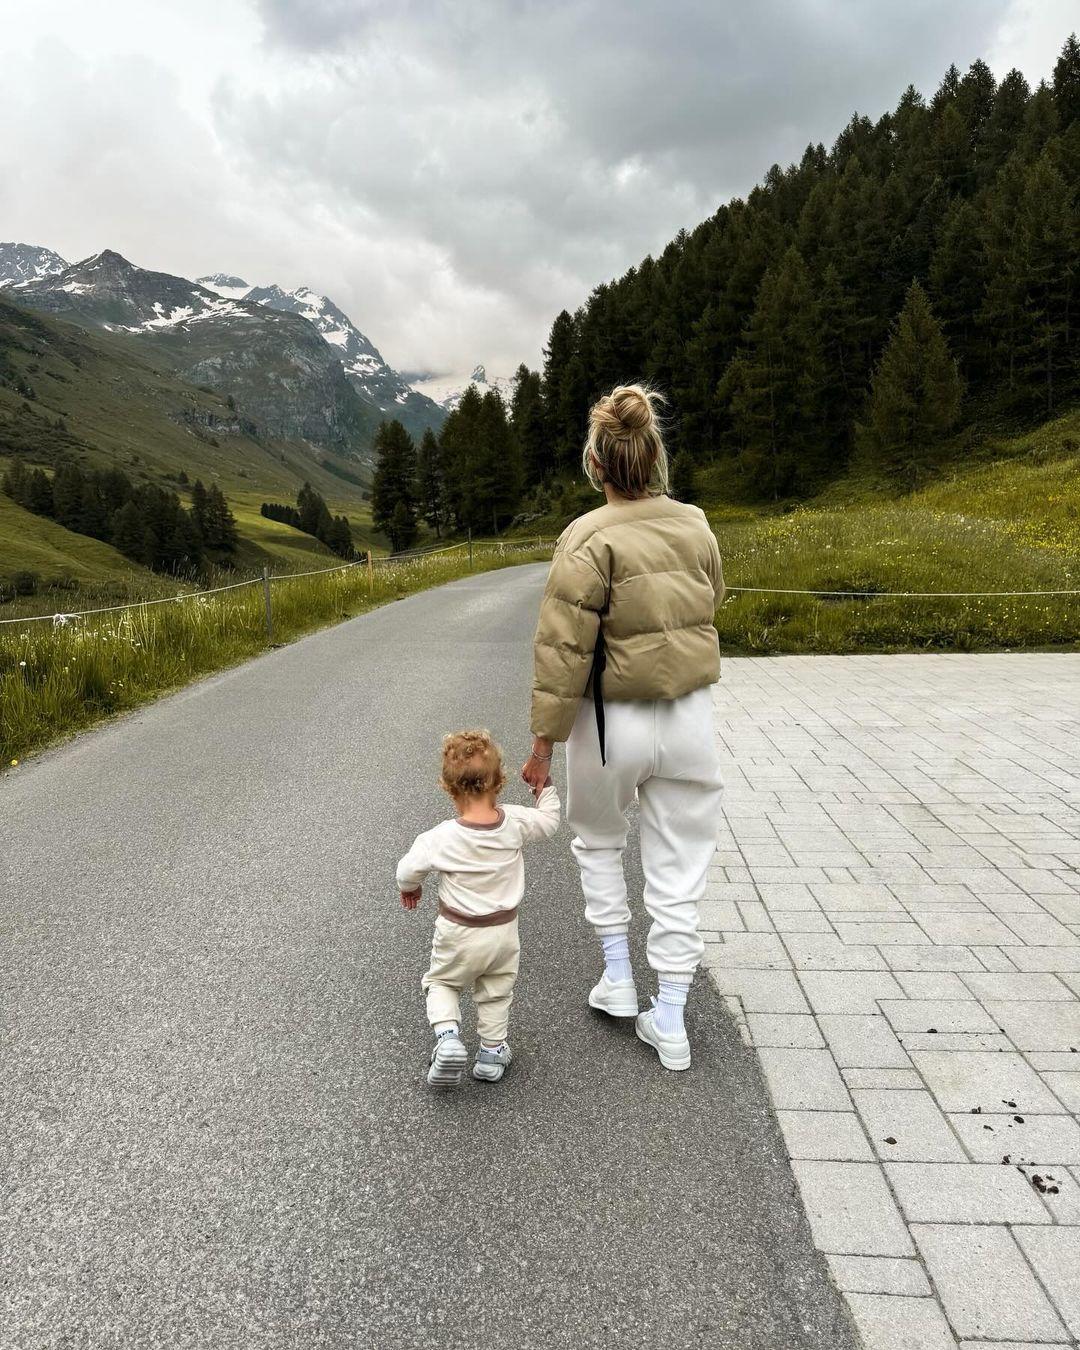 Brittany Mahomes segura a mão do filho na Suíça